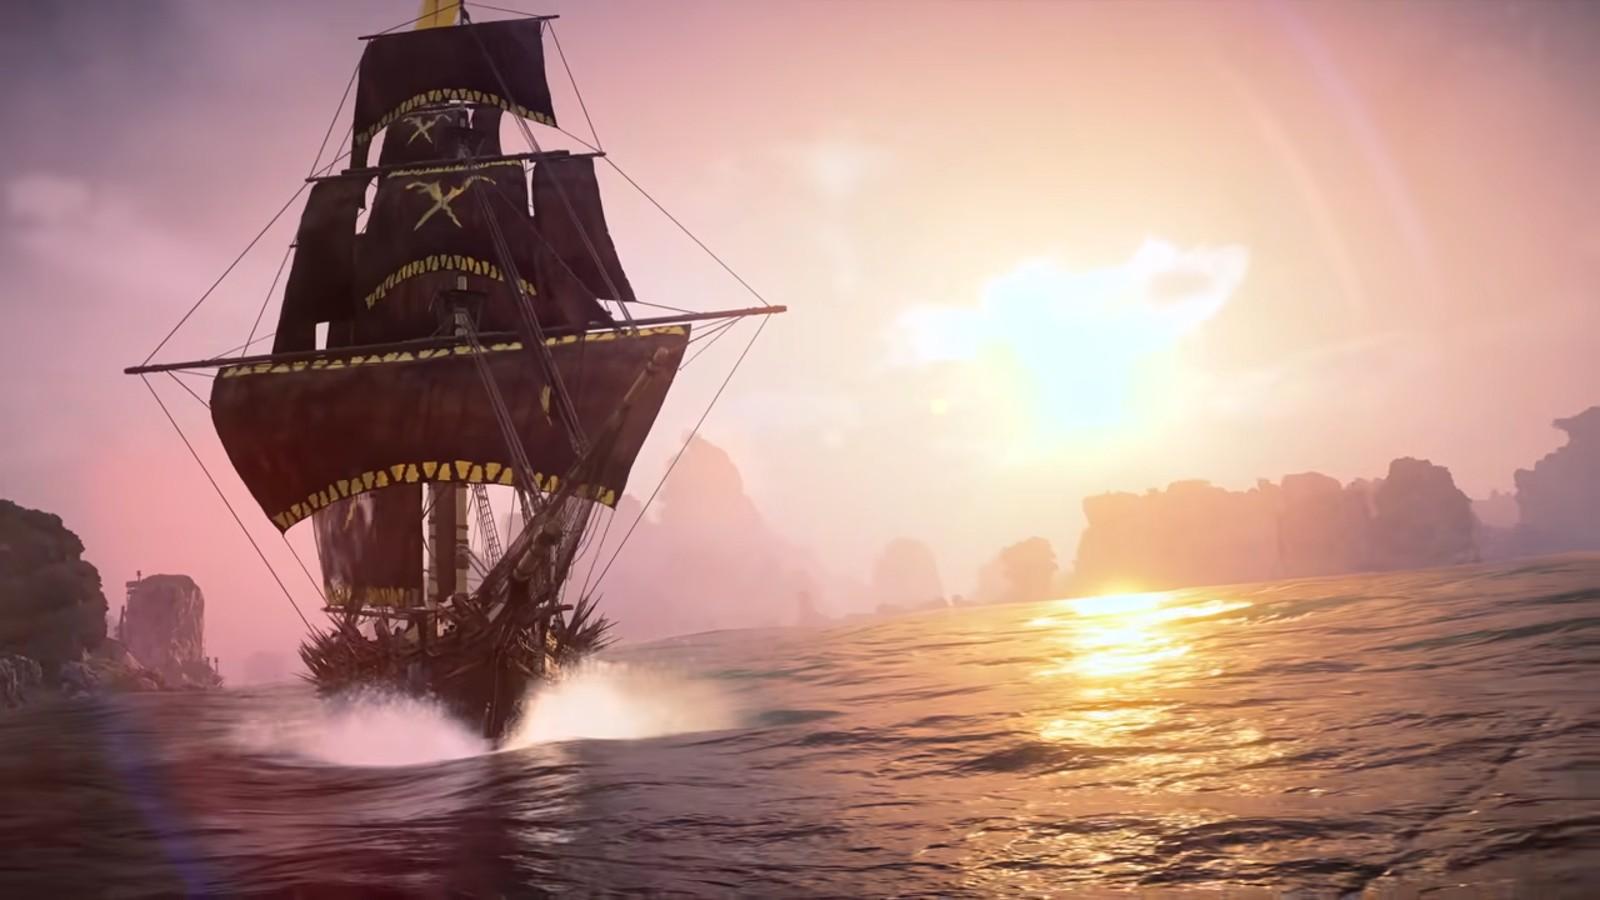 Skull and Bones Gameplay Video Showcases Naval Combat, Customization, and  More